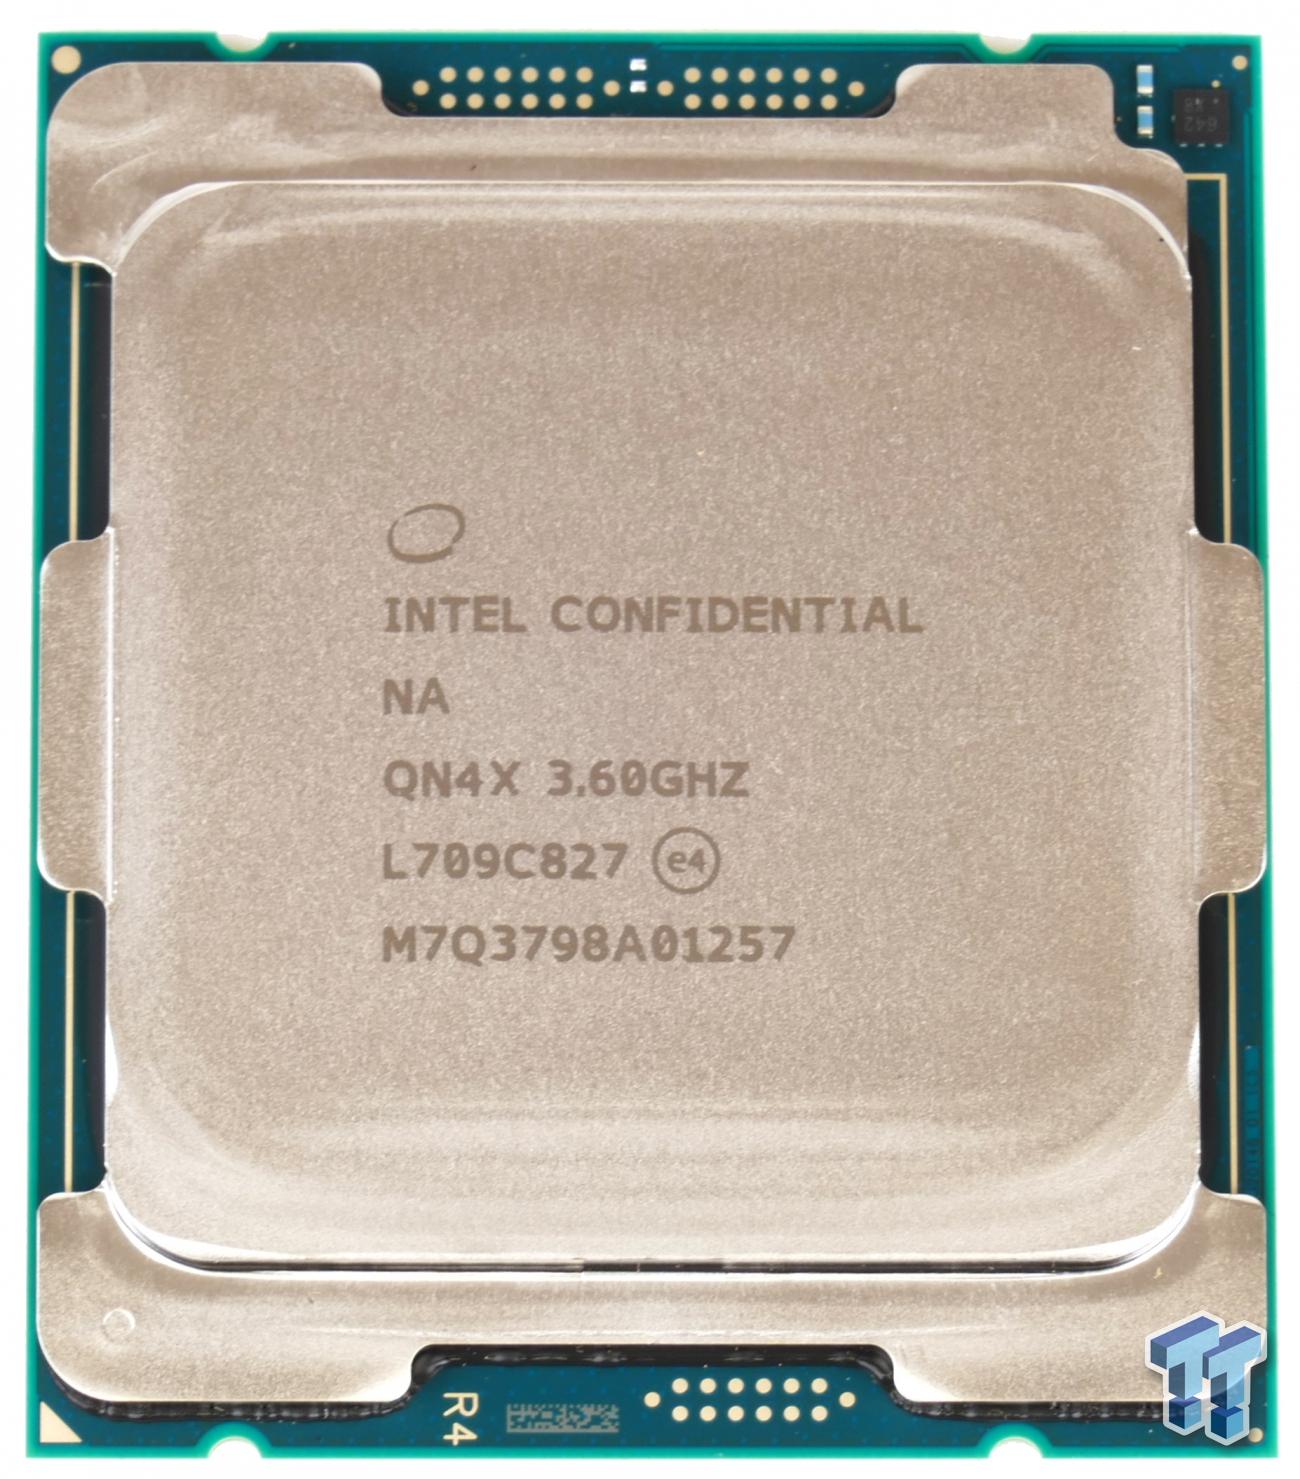 Intel Core i7-7820X X-Series Skylake-X 8C/16T CPU Review